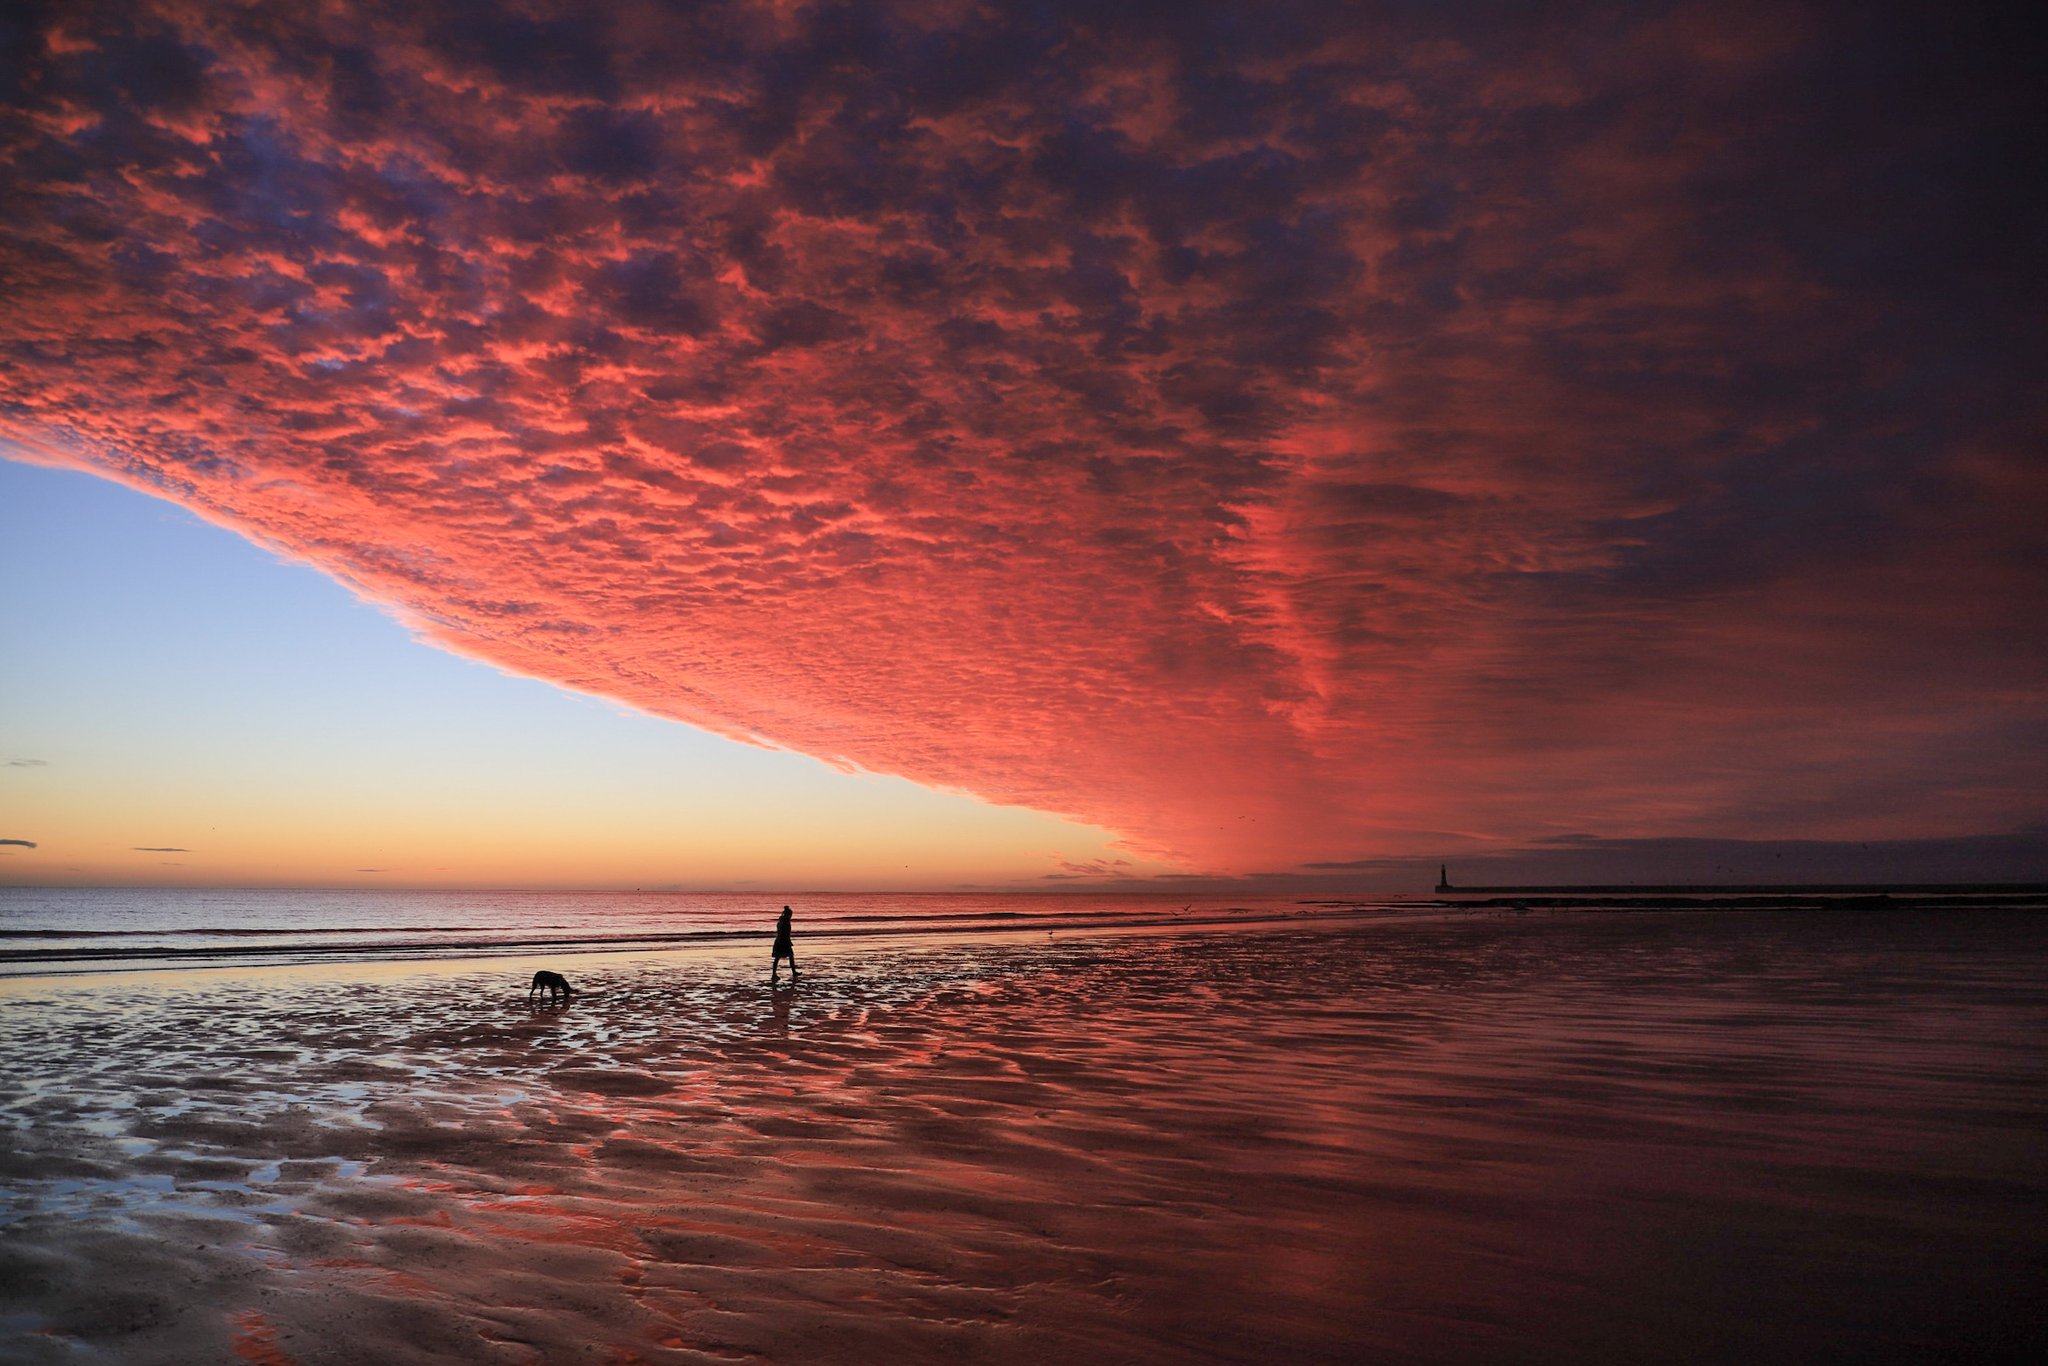 1st Place An epic and rare sunrise on Seaburn Beach, England by simon c woodley @simoncwoodley